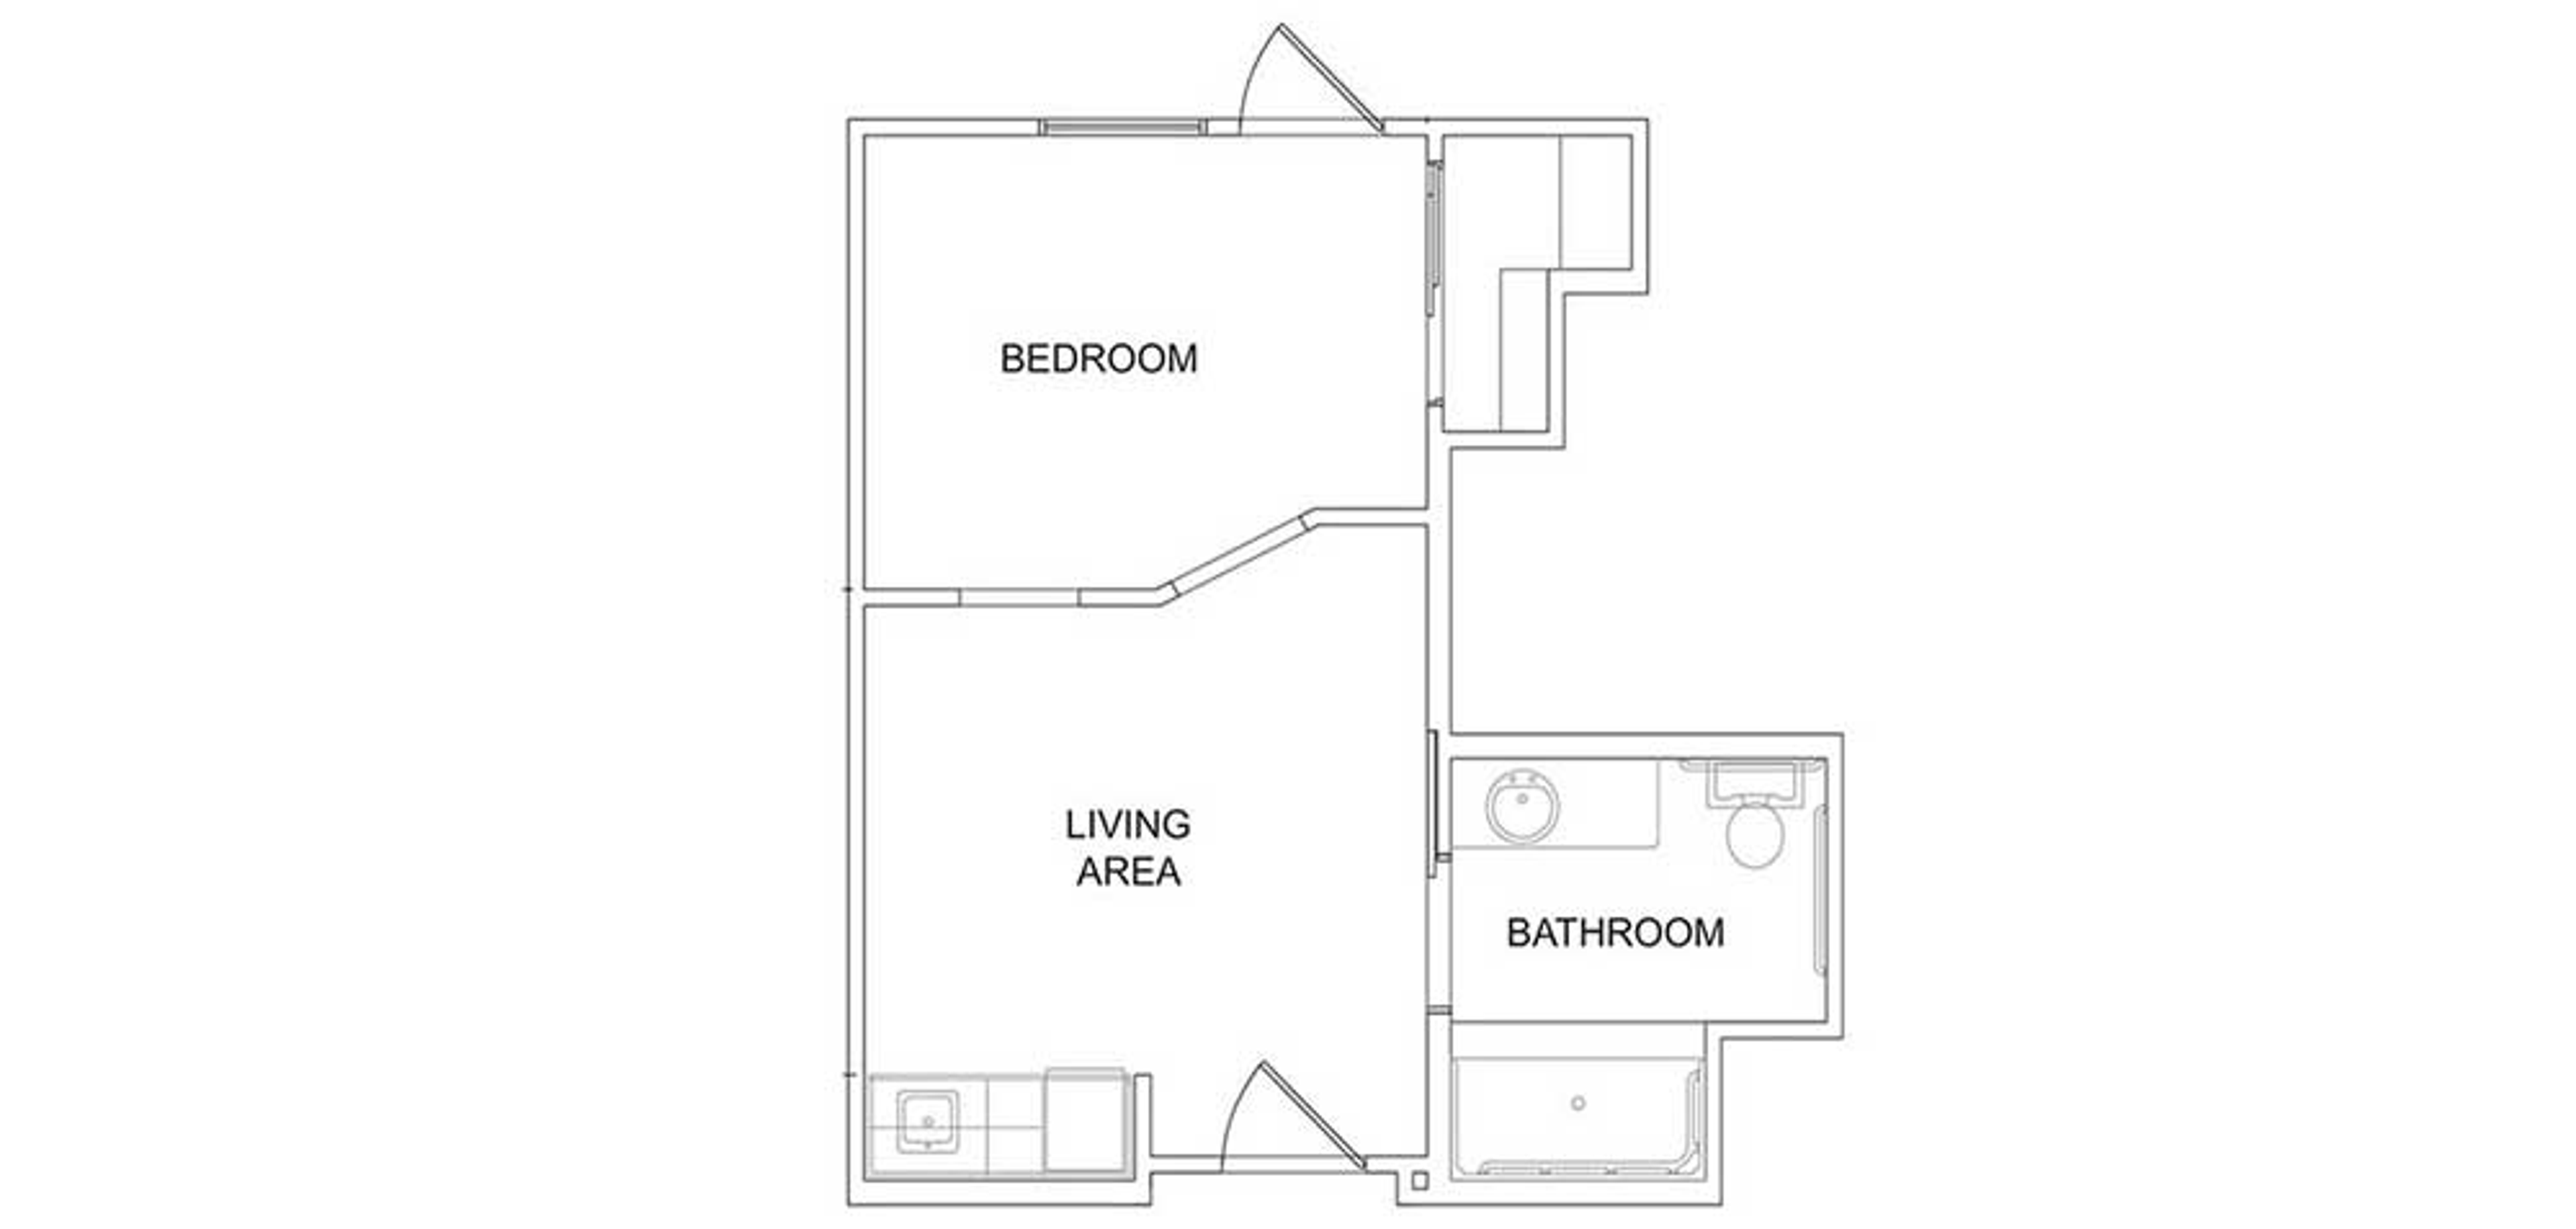 Floorplan - Magnolia Court - 1B 1B Courtyard Assisted Living